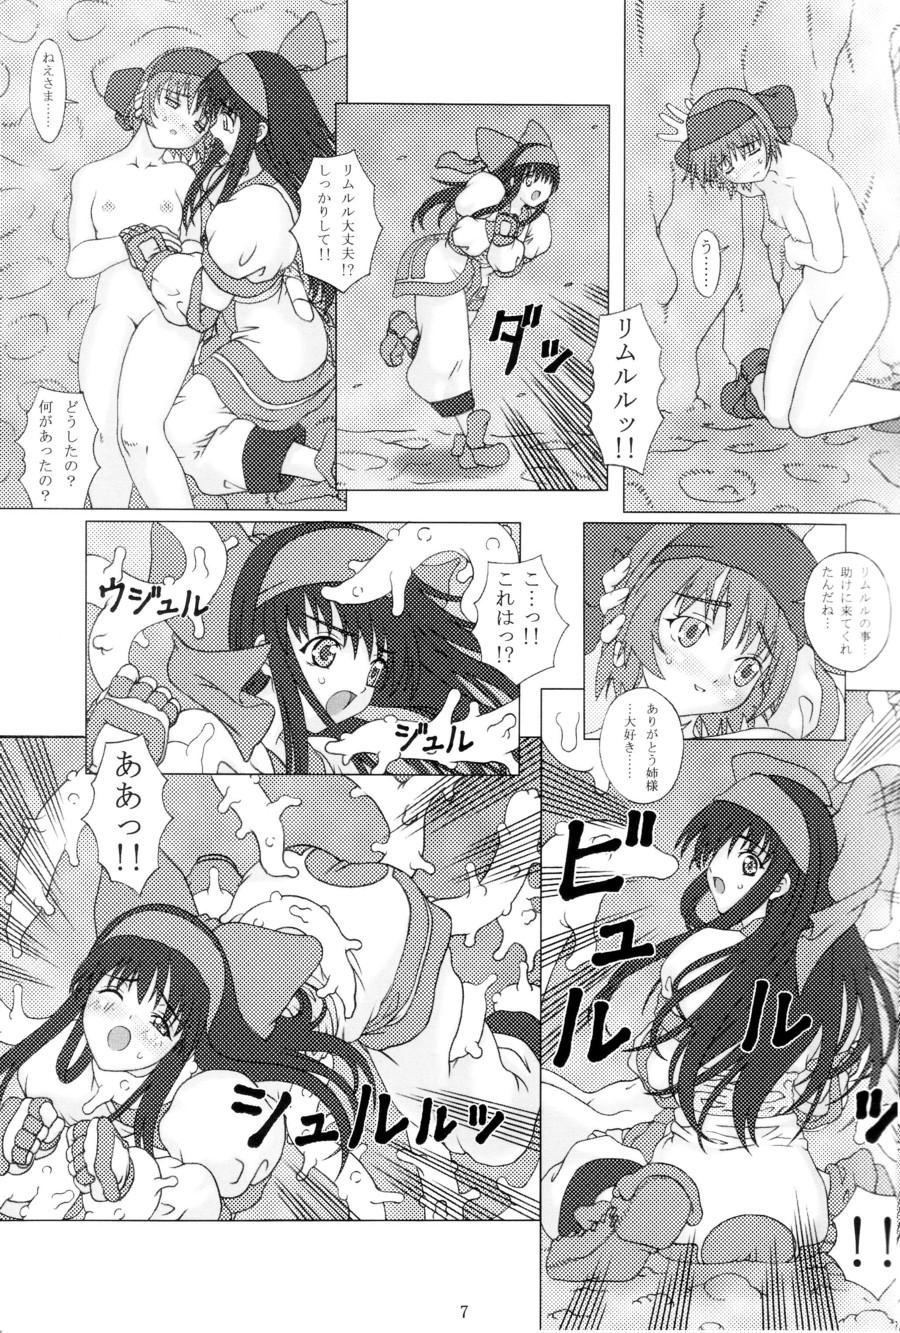 Nalgas Junk Inbaku no Miko - Samurai spirits Female Orgasm - Page 6